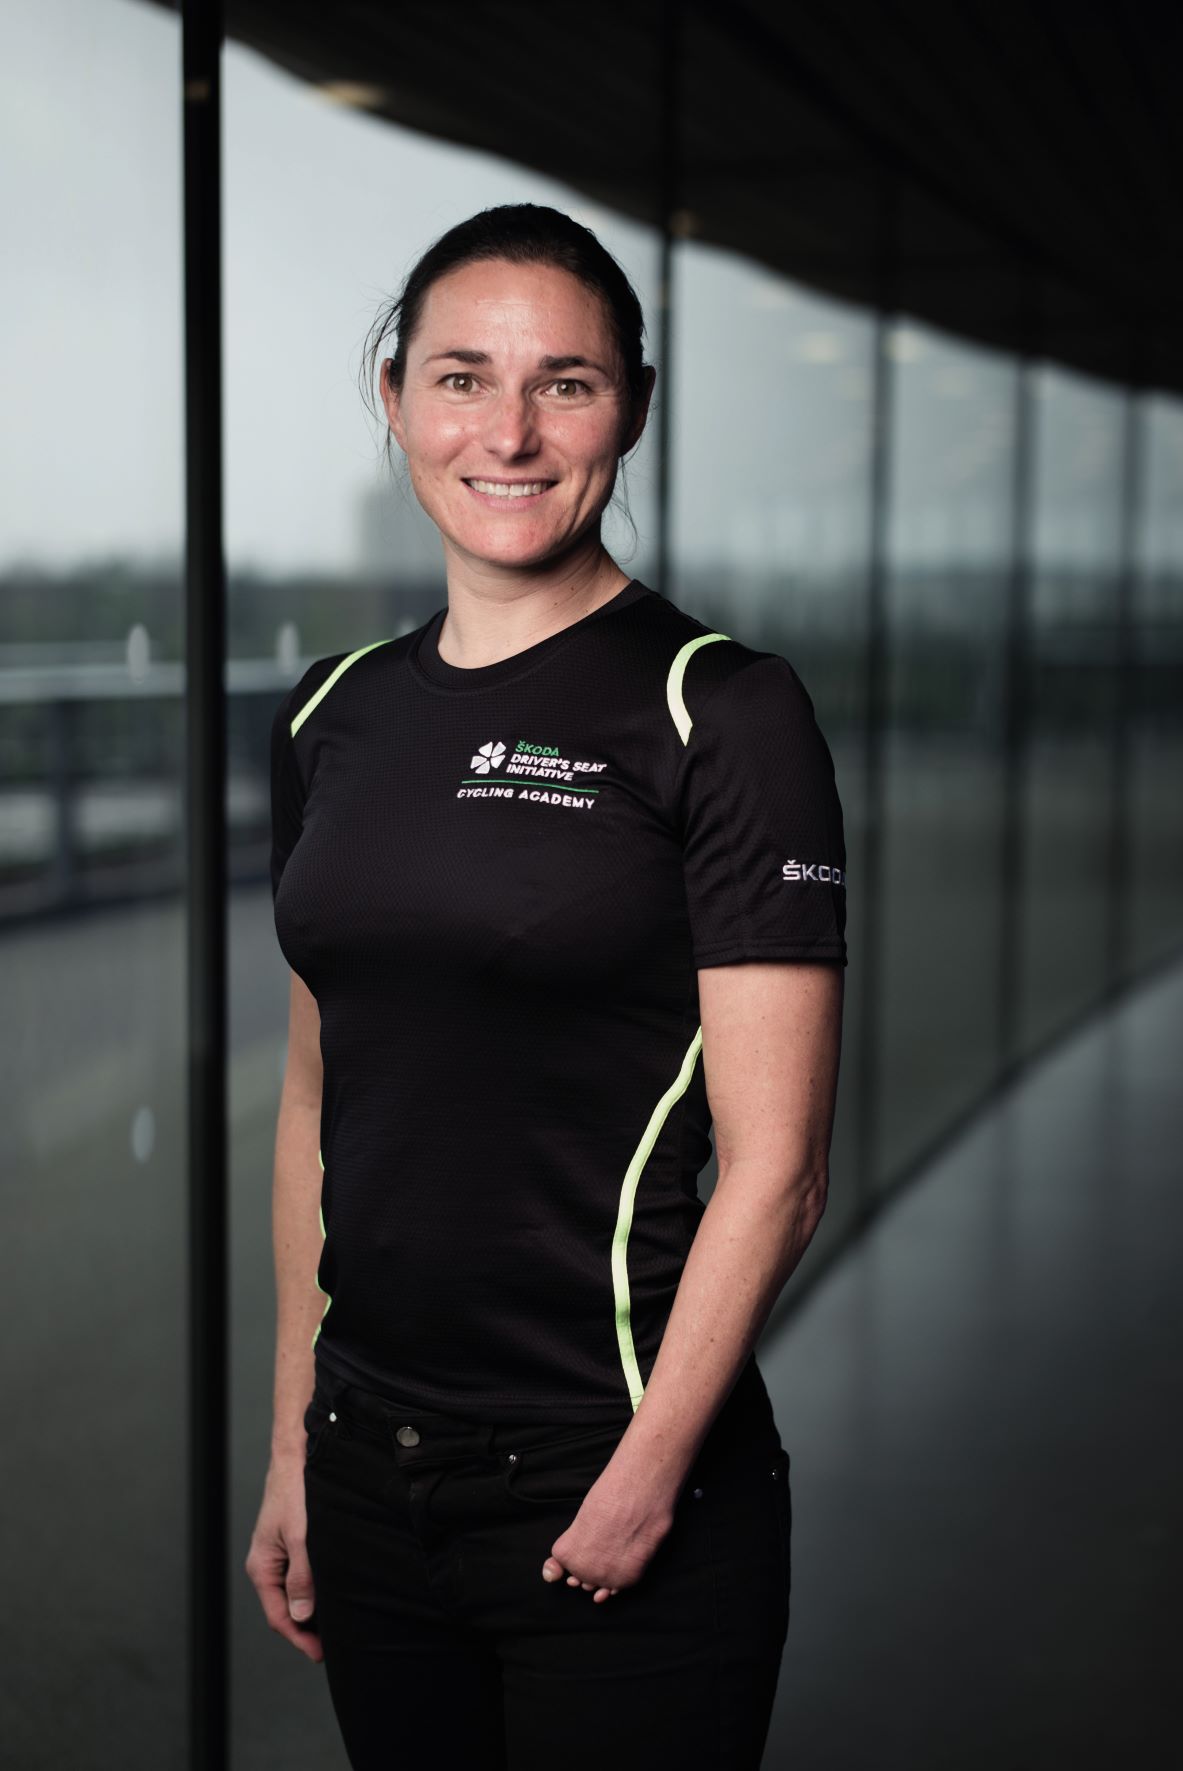 cyclist dame sarah storey britian's most successful Paralympian